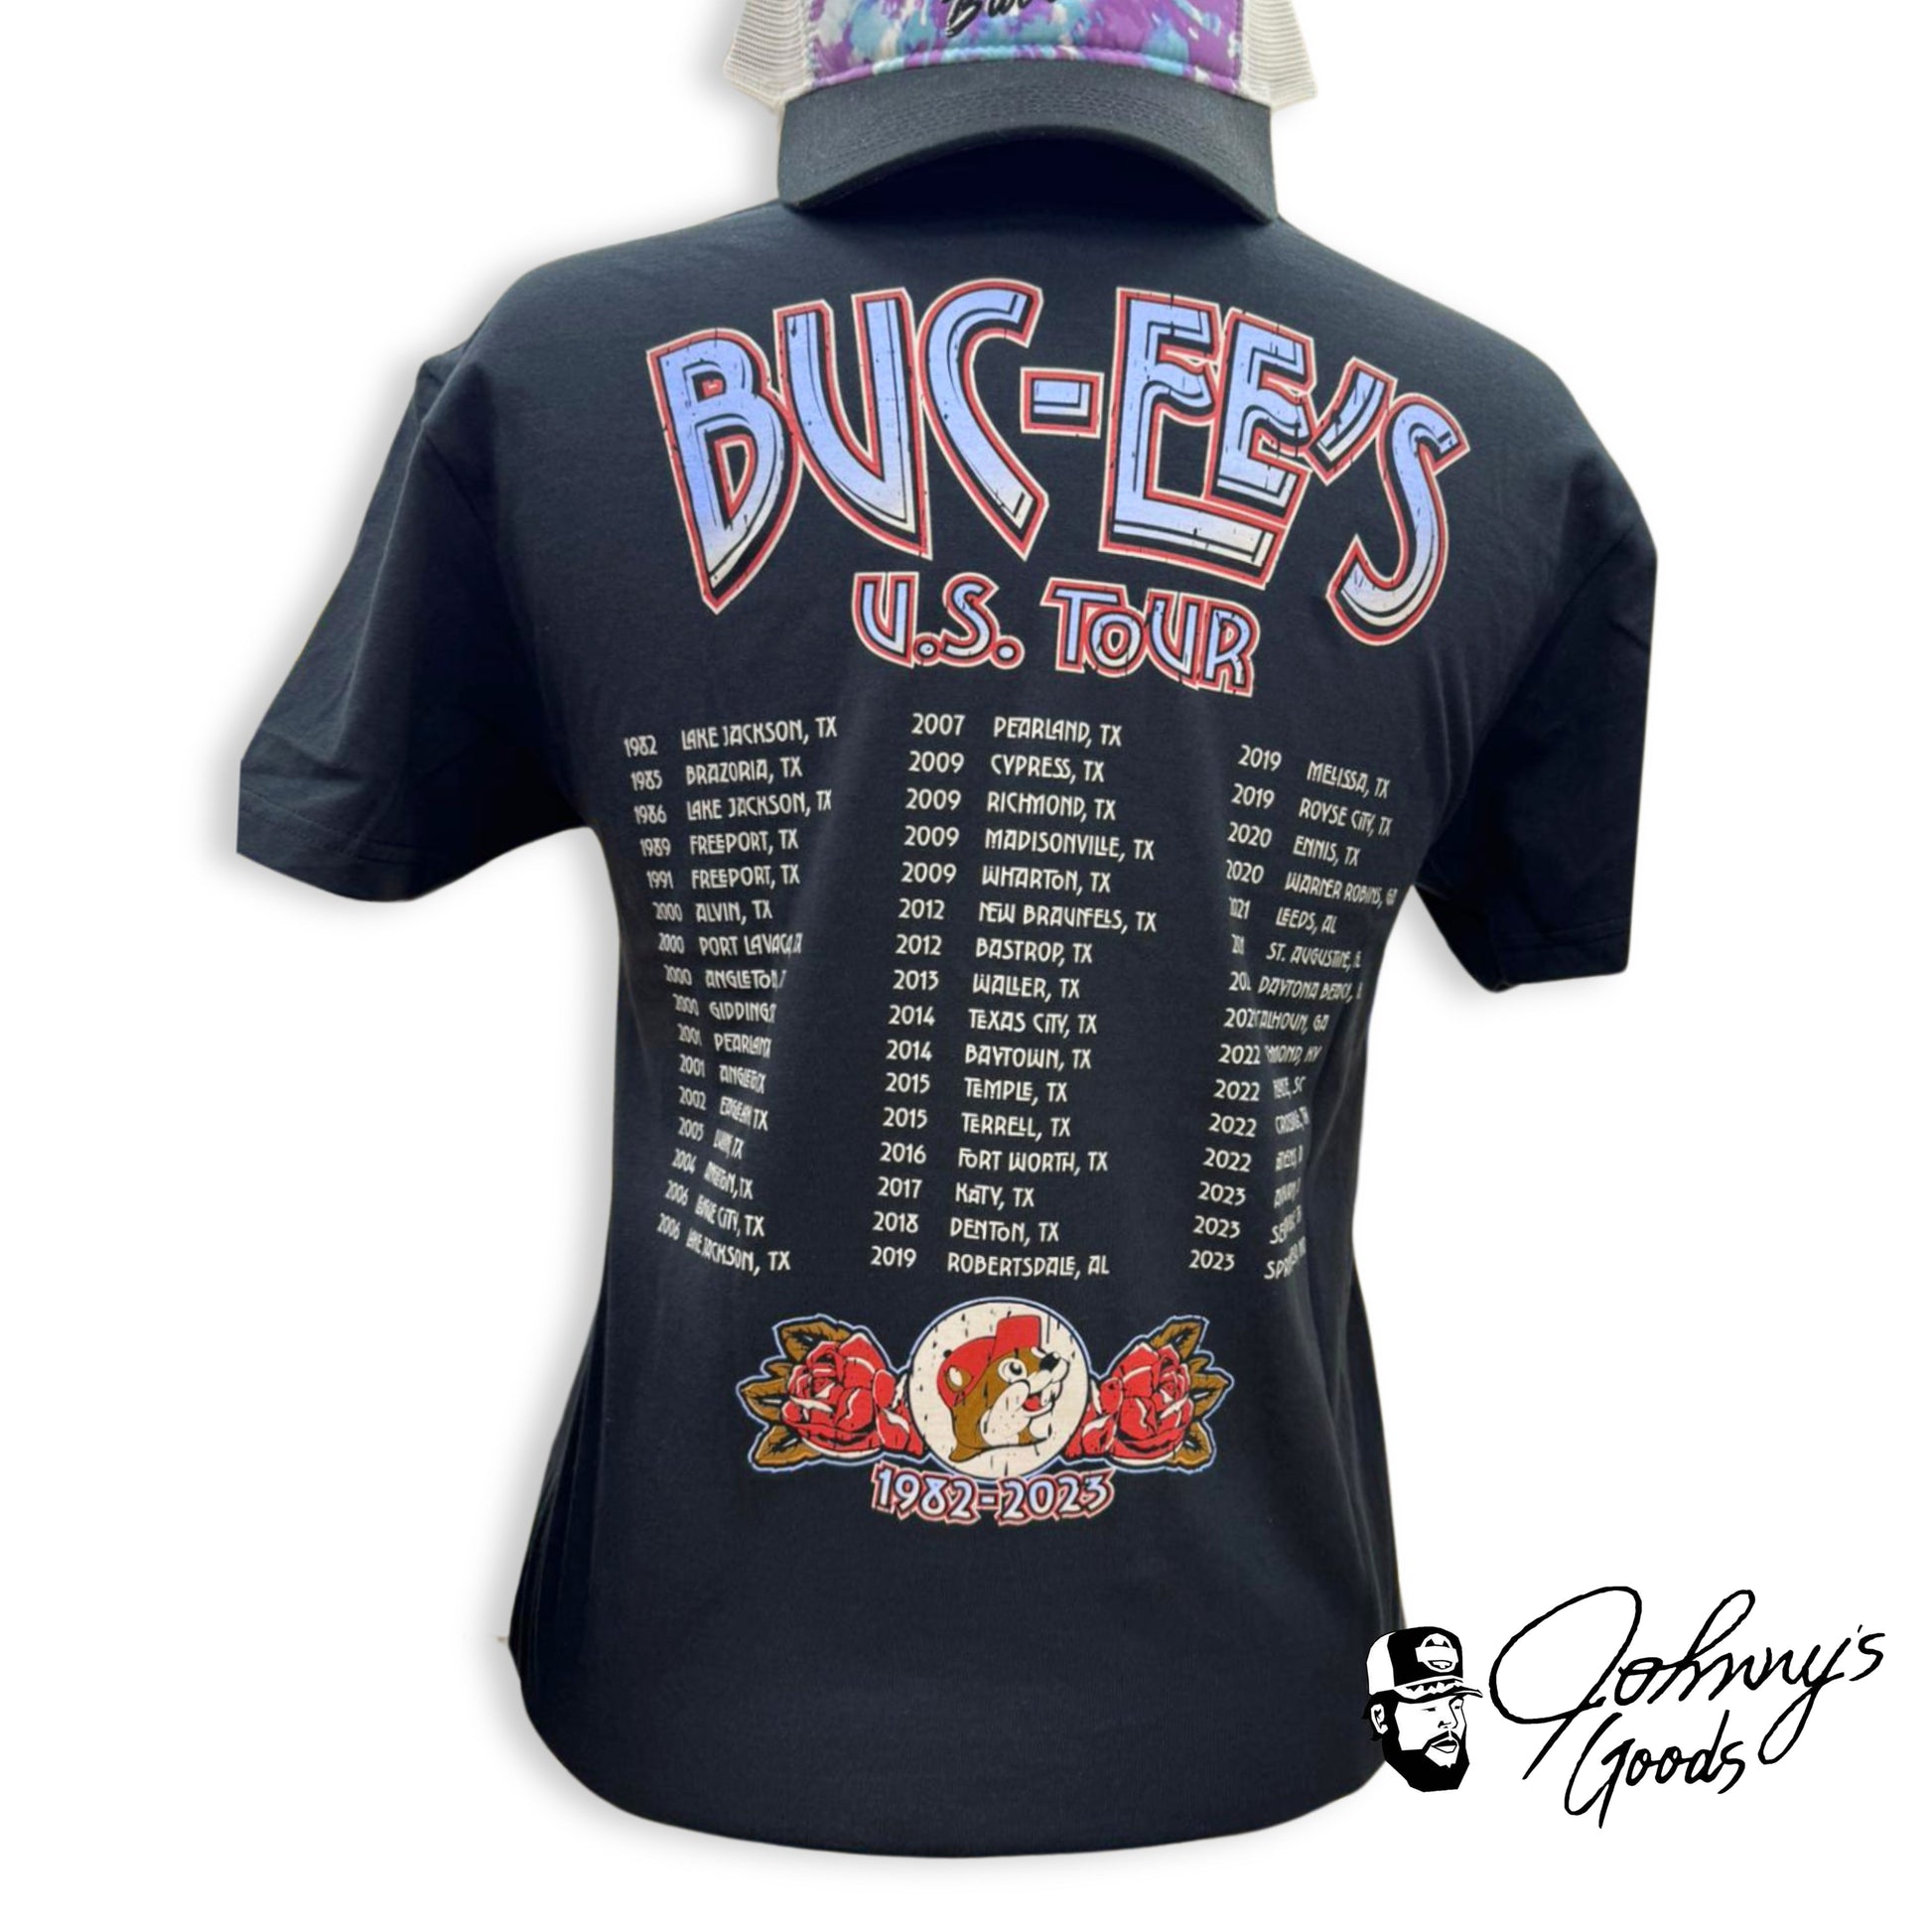 Buc-ee's US Tour Shirt 1982-2023 buc ees buc ee's bucees buccees buc-ees